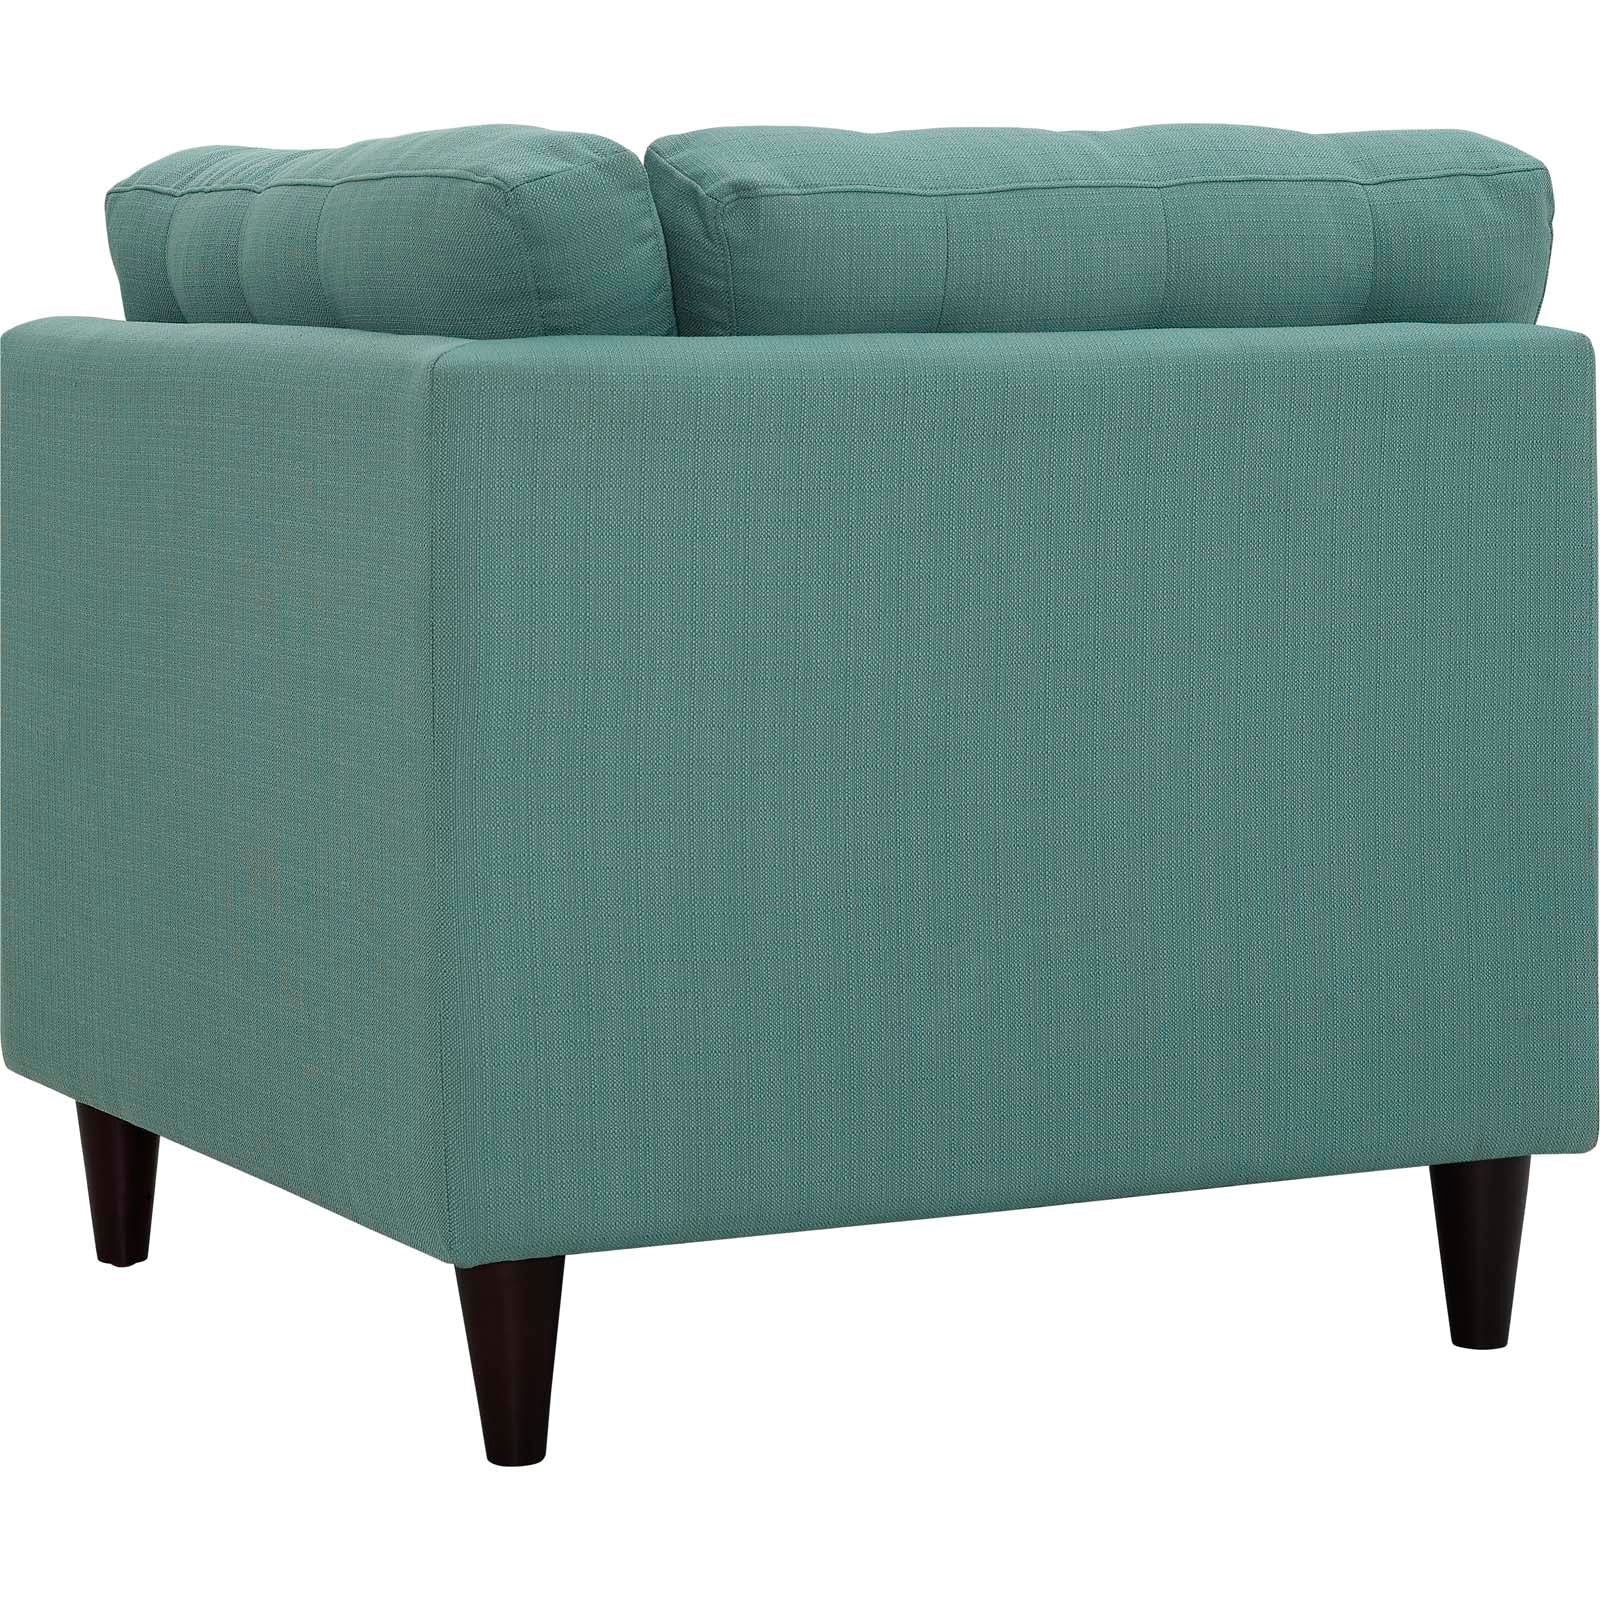 Empress Upholstered Fabric Corner Sofa - East Shore Modern Home Furnishings